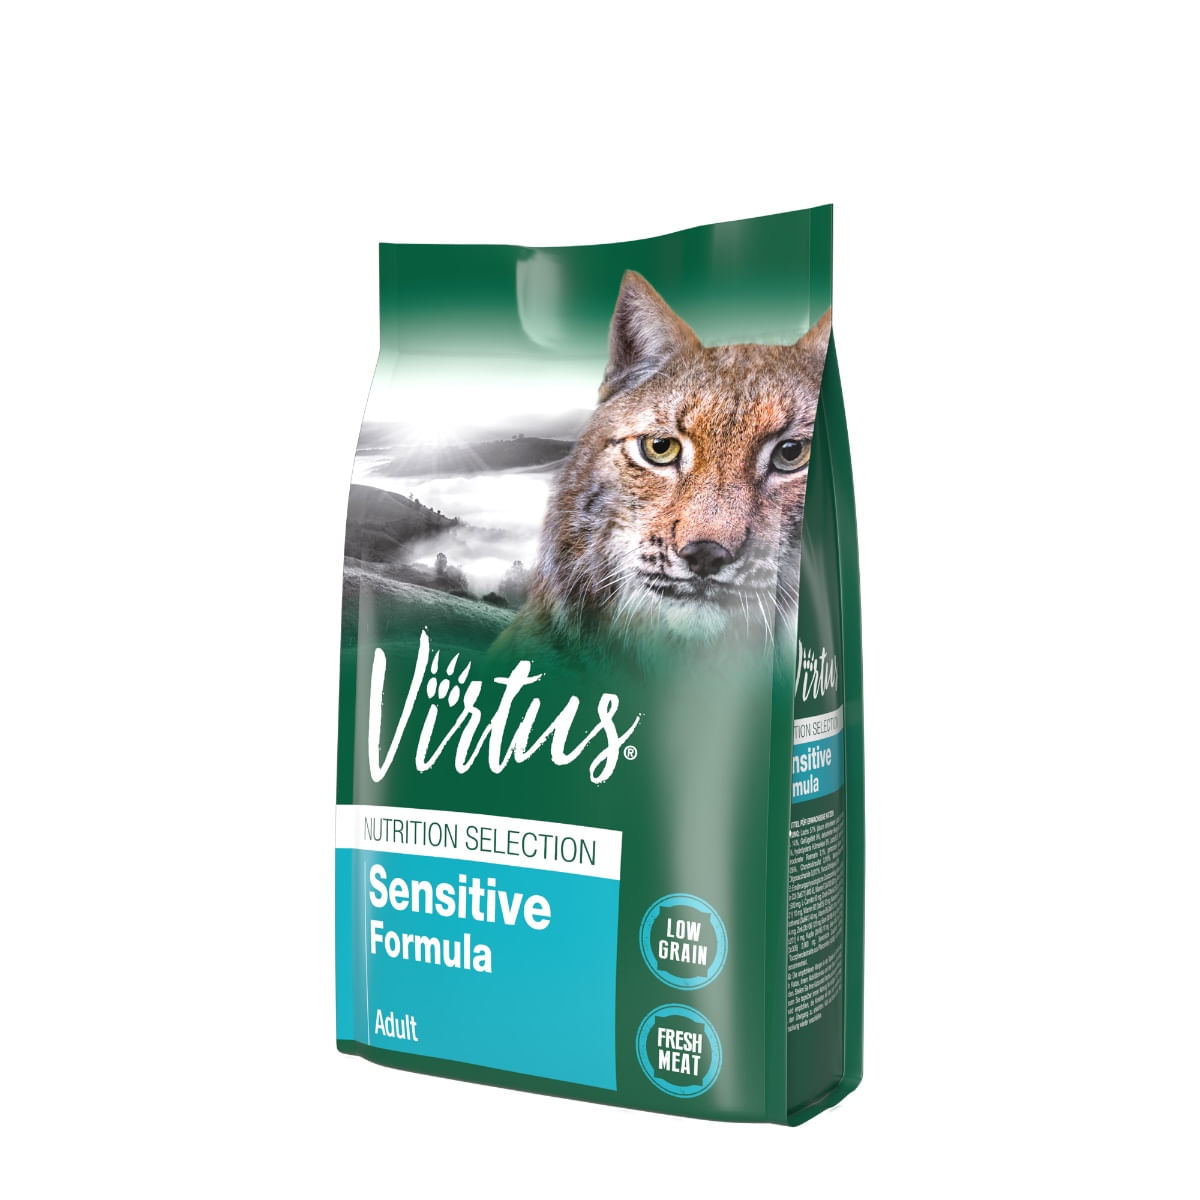 Virtus Cat Nutrition Selection Sensitive Formula